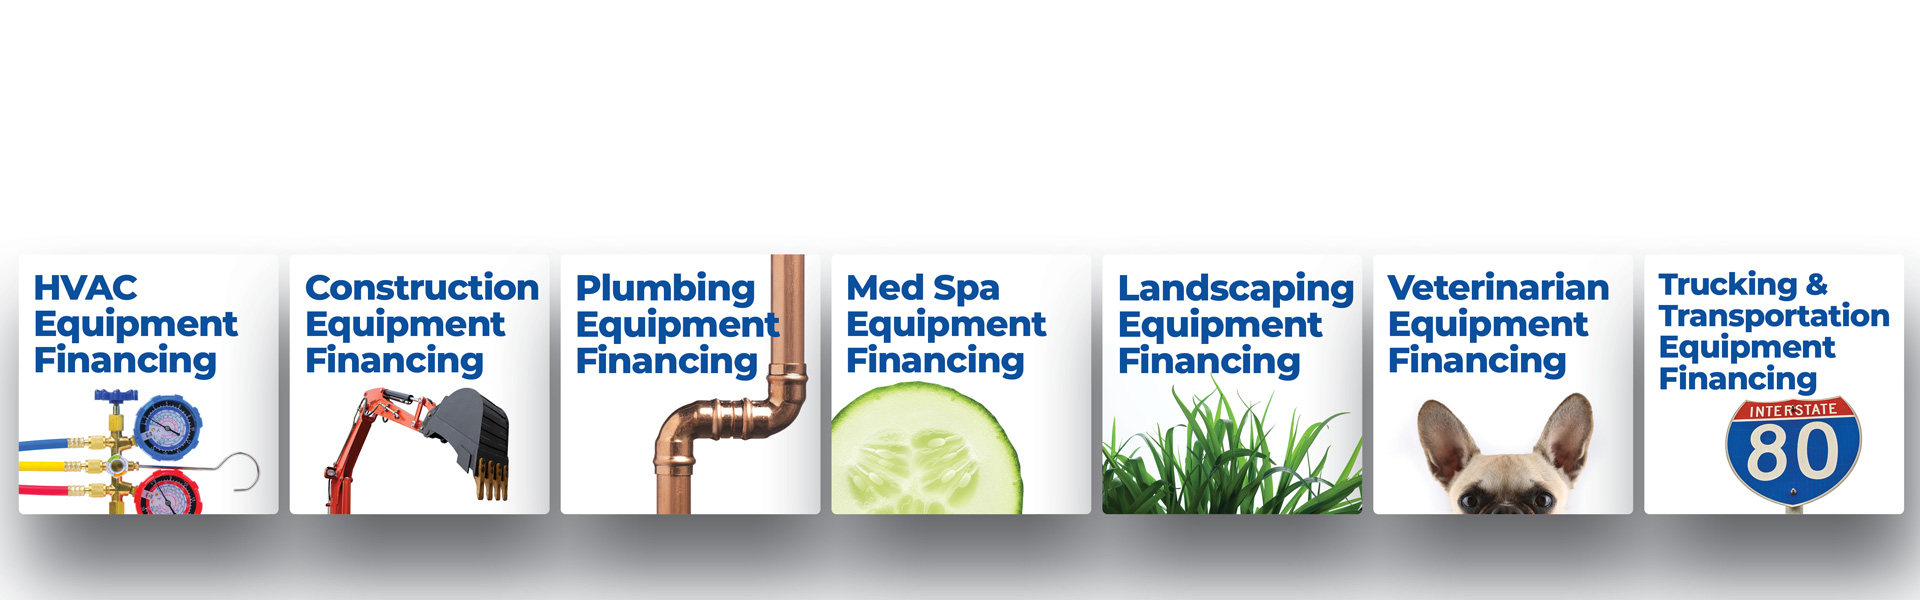 Equipment Financing Homepage Rotator